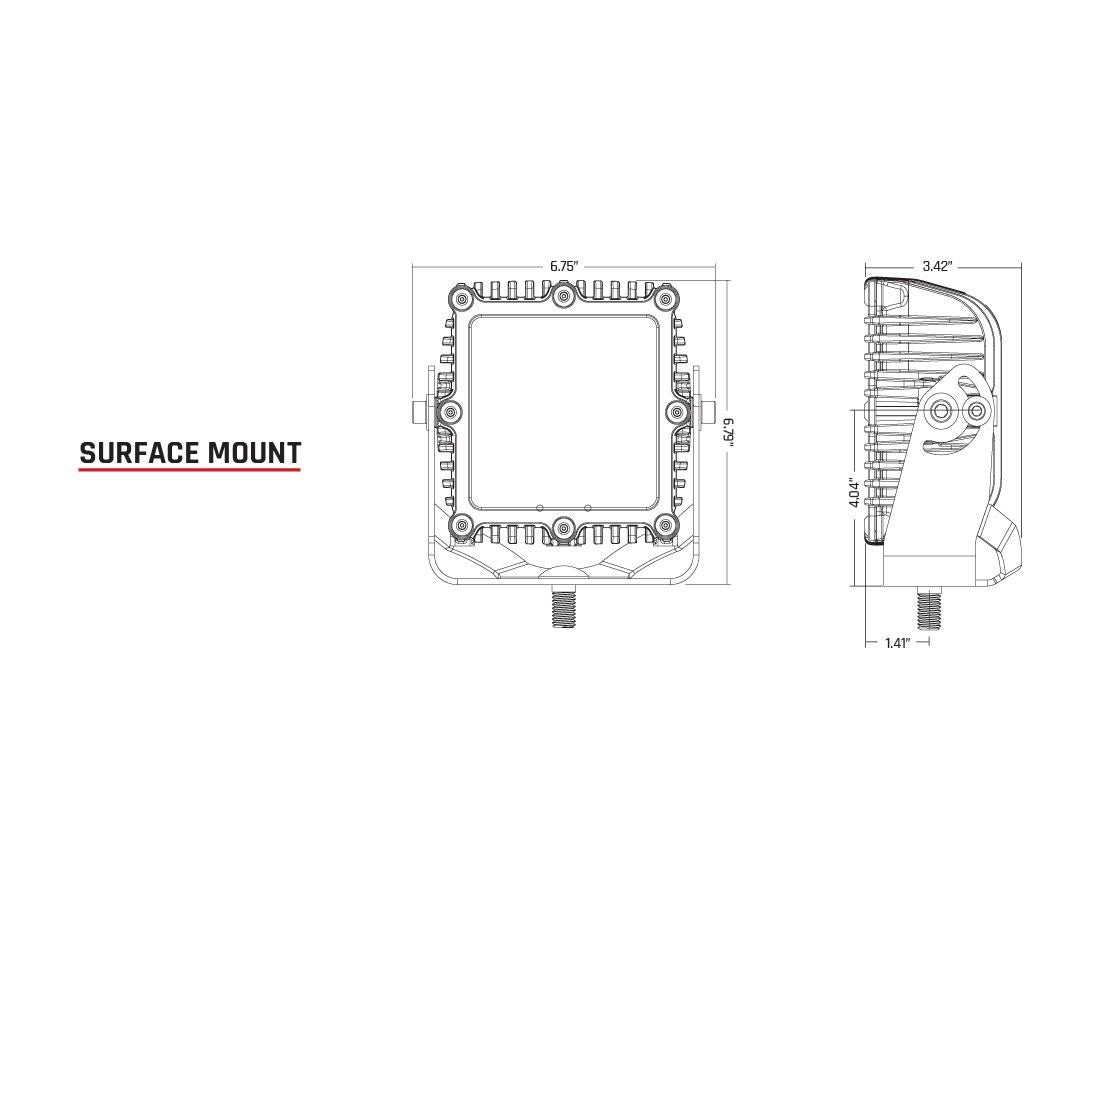 RIGID Industries Q-Series PRO LED Light, Flood Optic, Black Housing, Single